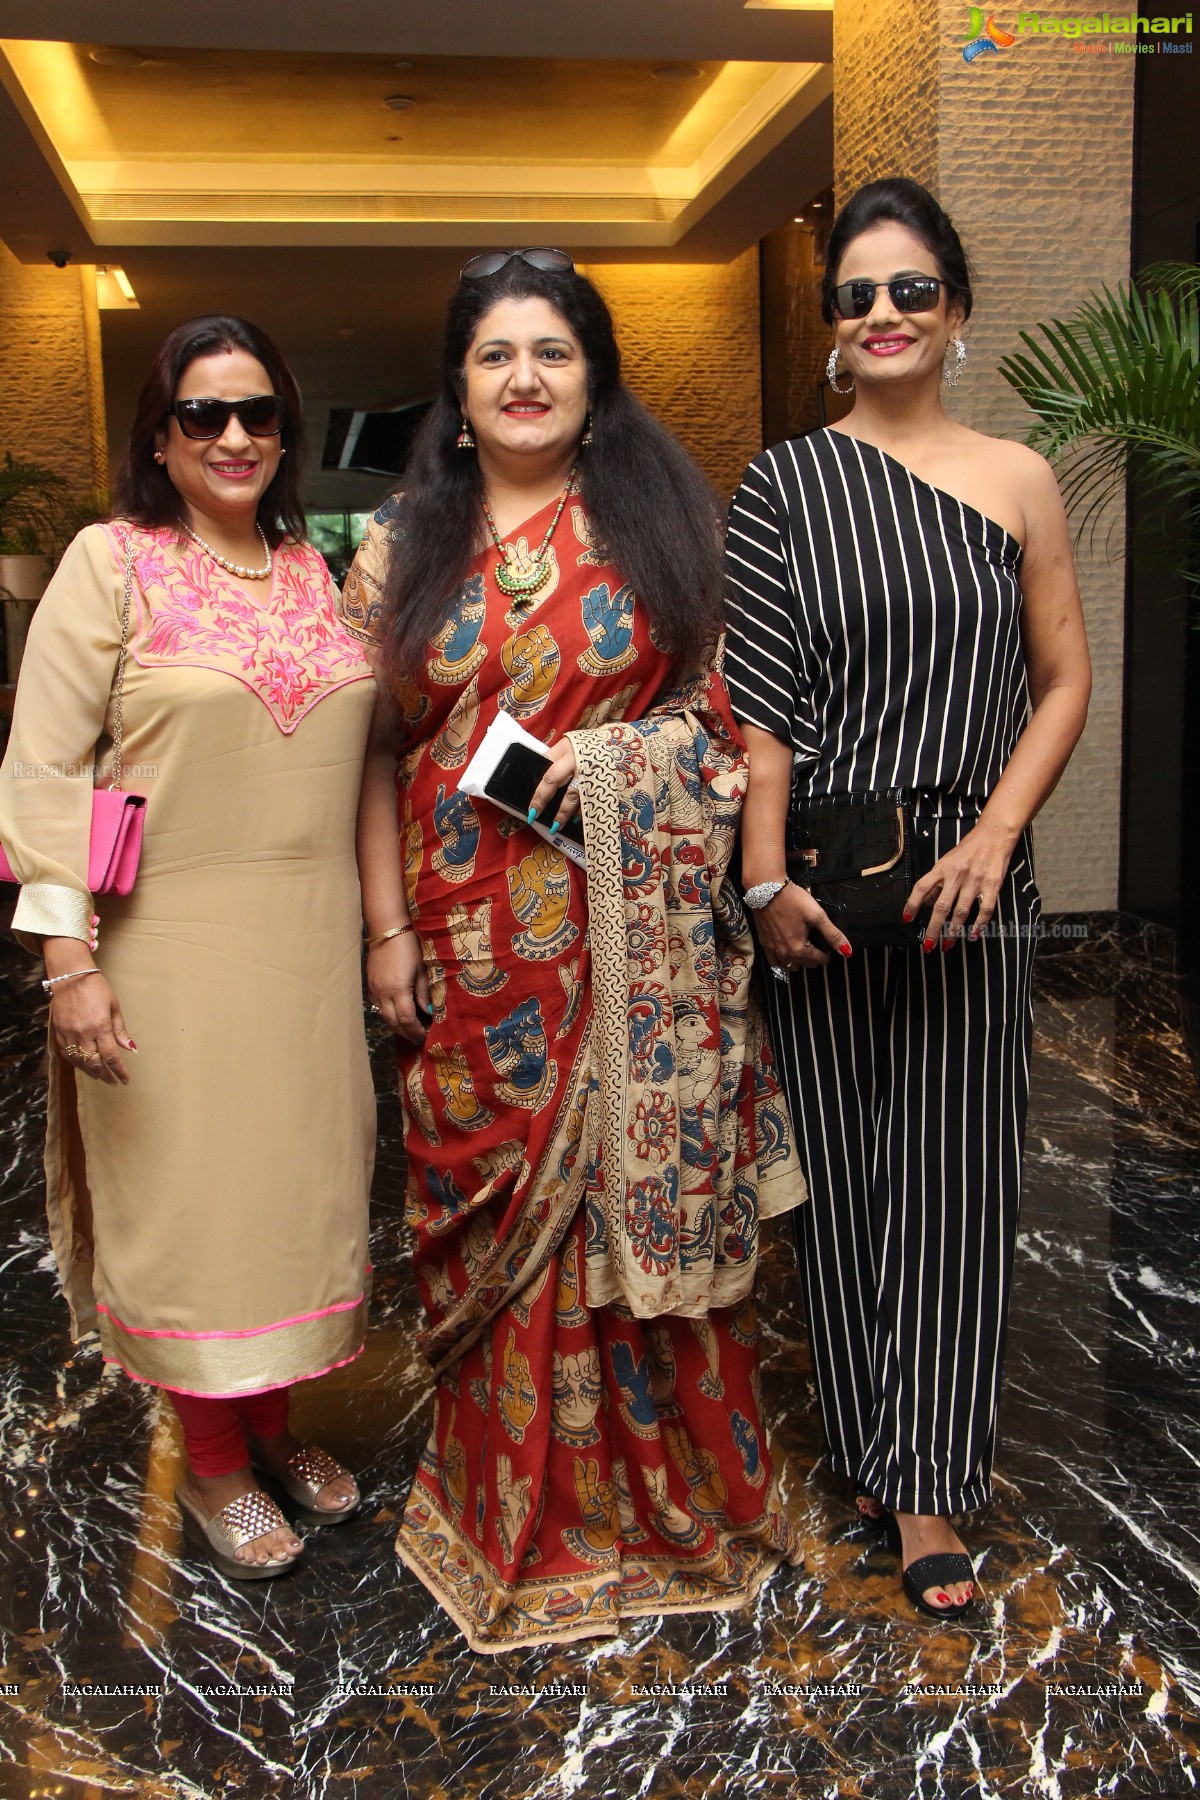 Latest Range of Equisite Jewelry Designs Showcase by Namita Sondhi and Sonali Sharma at Park Hyatt, Hyderabad